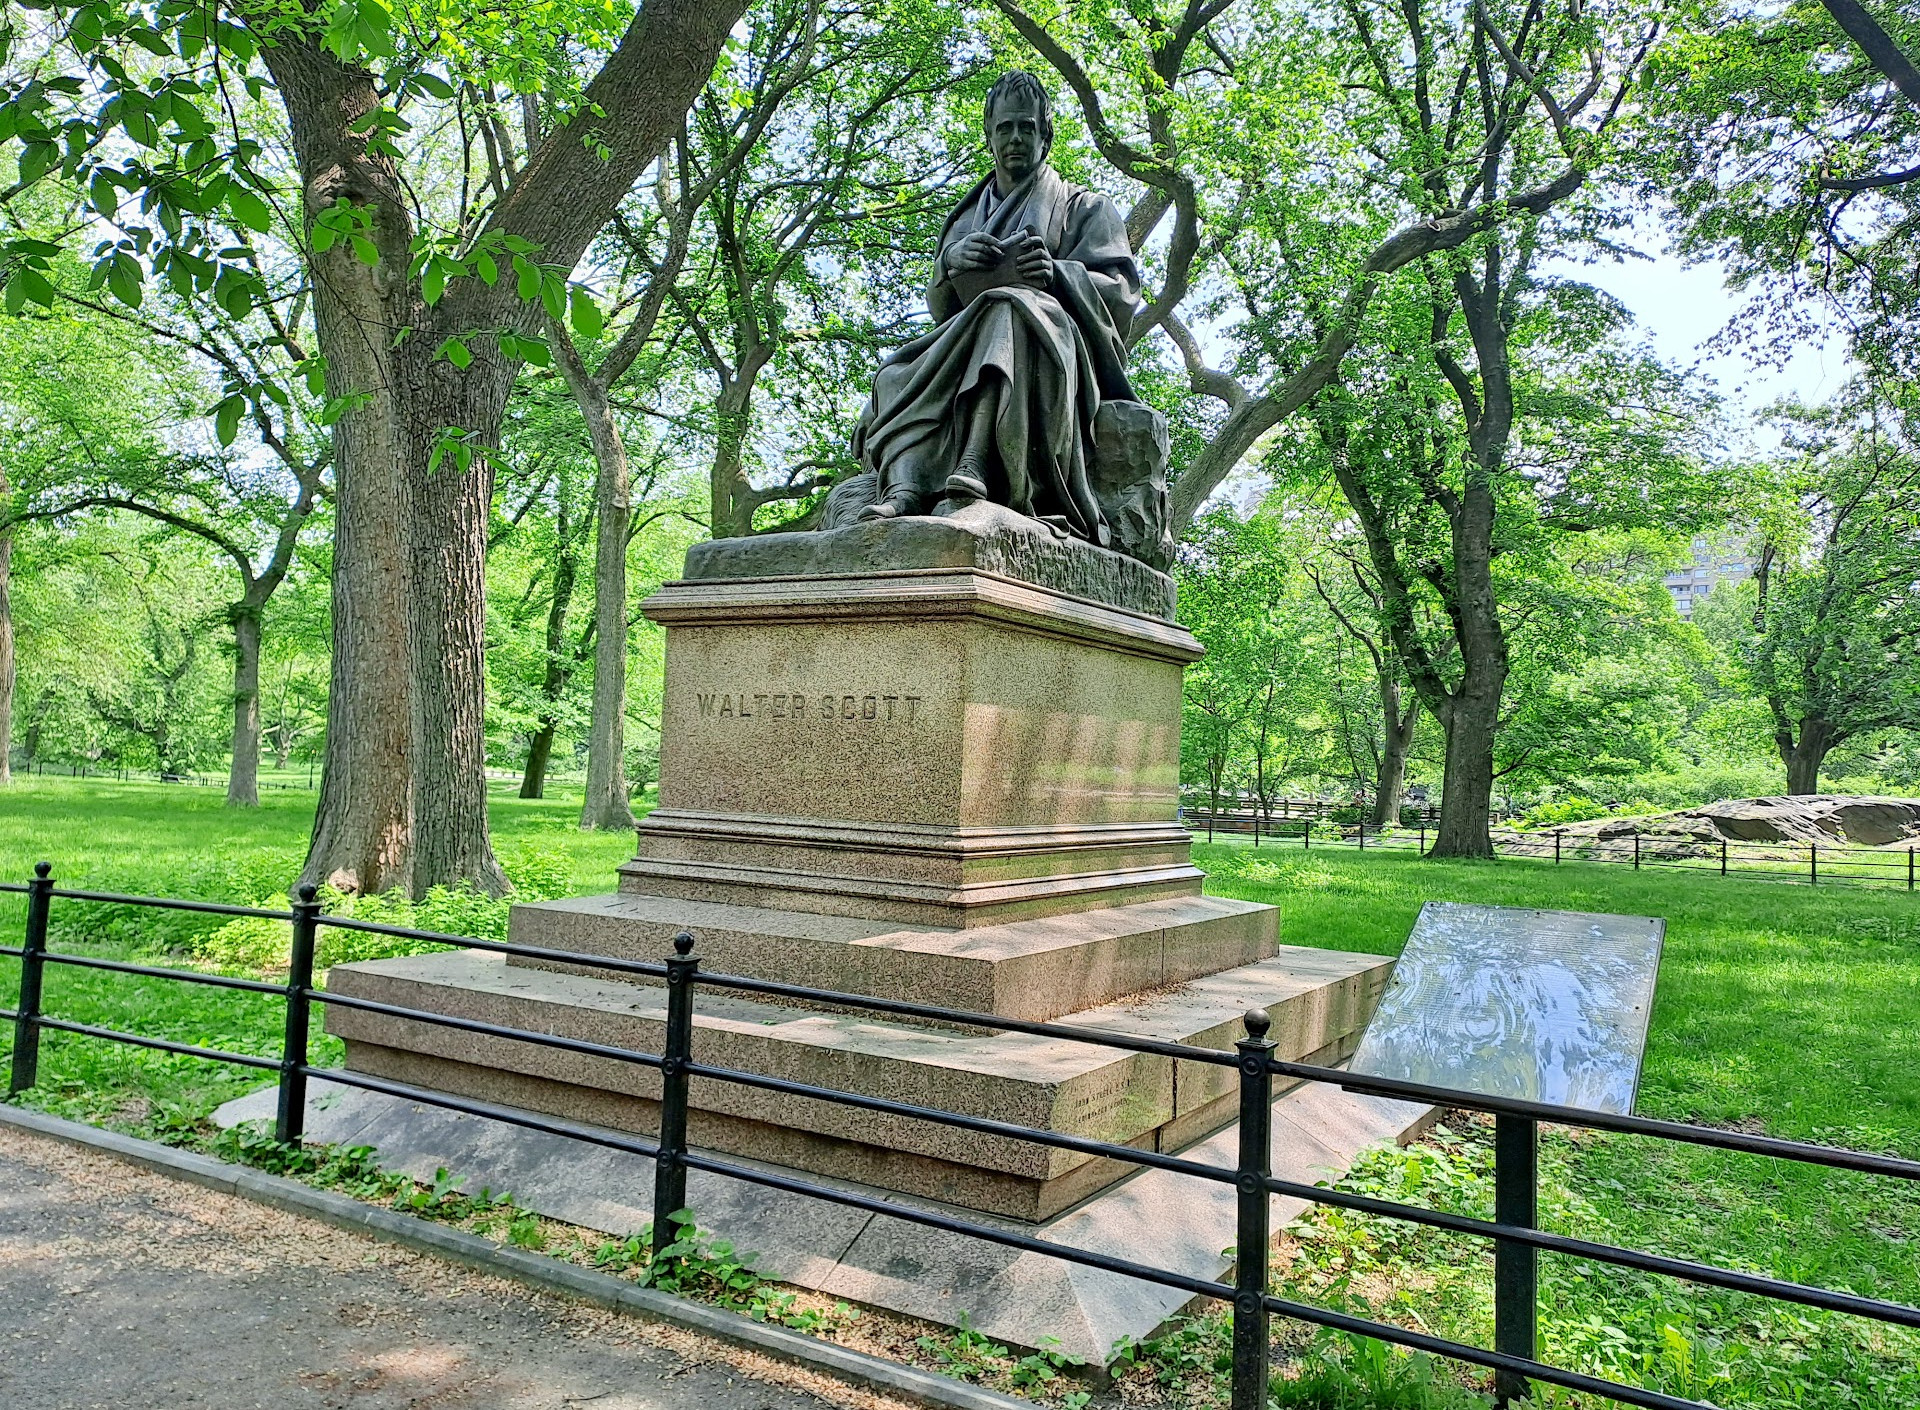 Sir Walter Scott-standbeeld